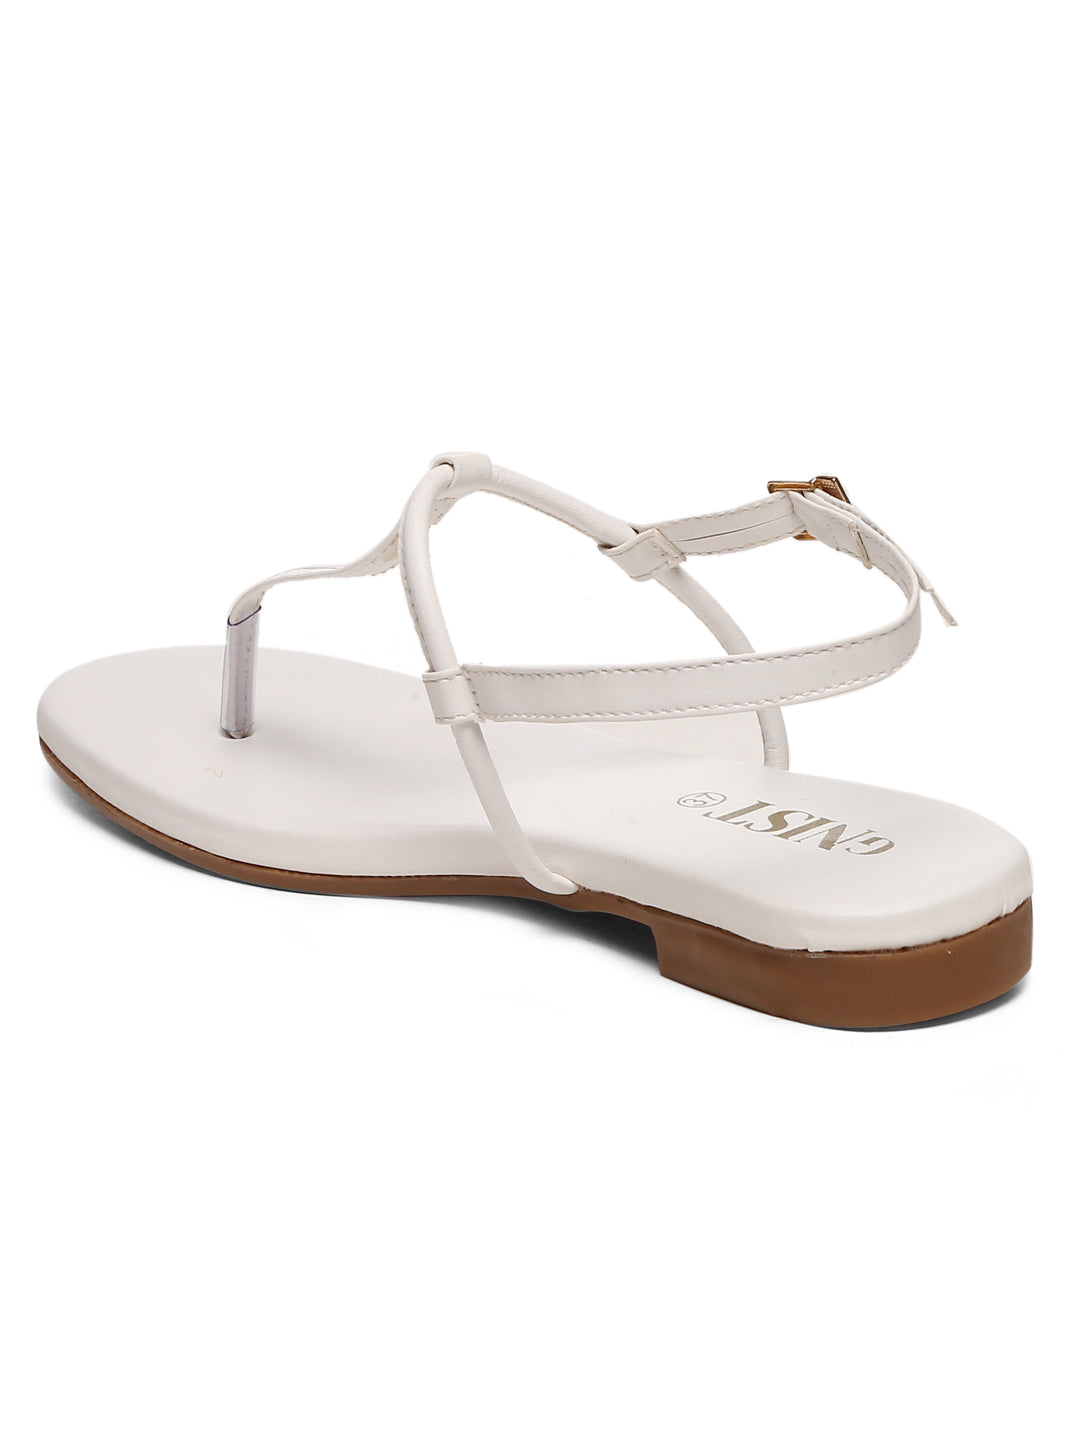 Total Sweetie Flat Sandals - White | Fashion Nova, Shoes | Fashion Nova